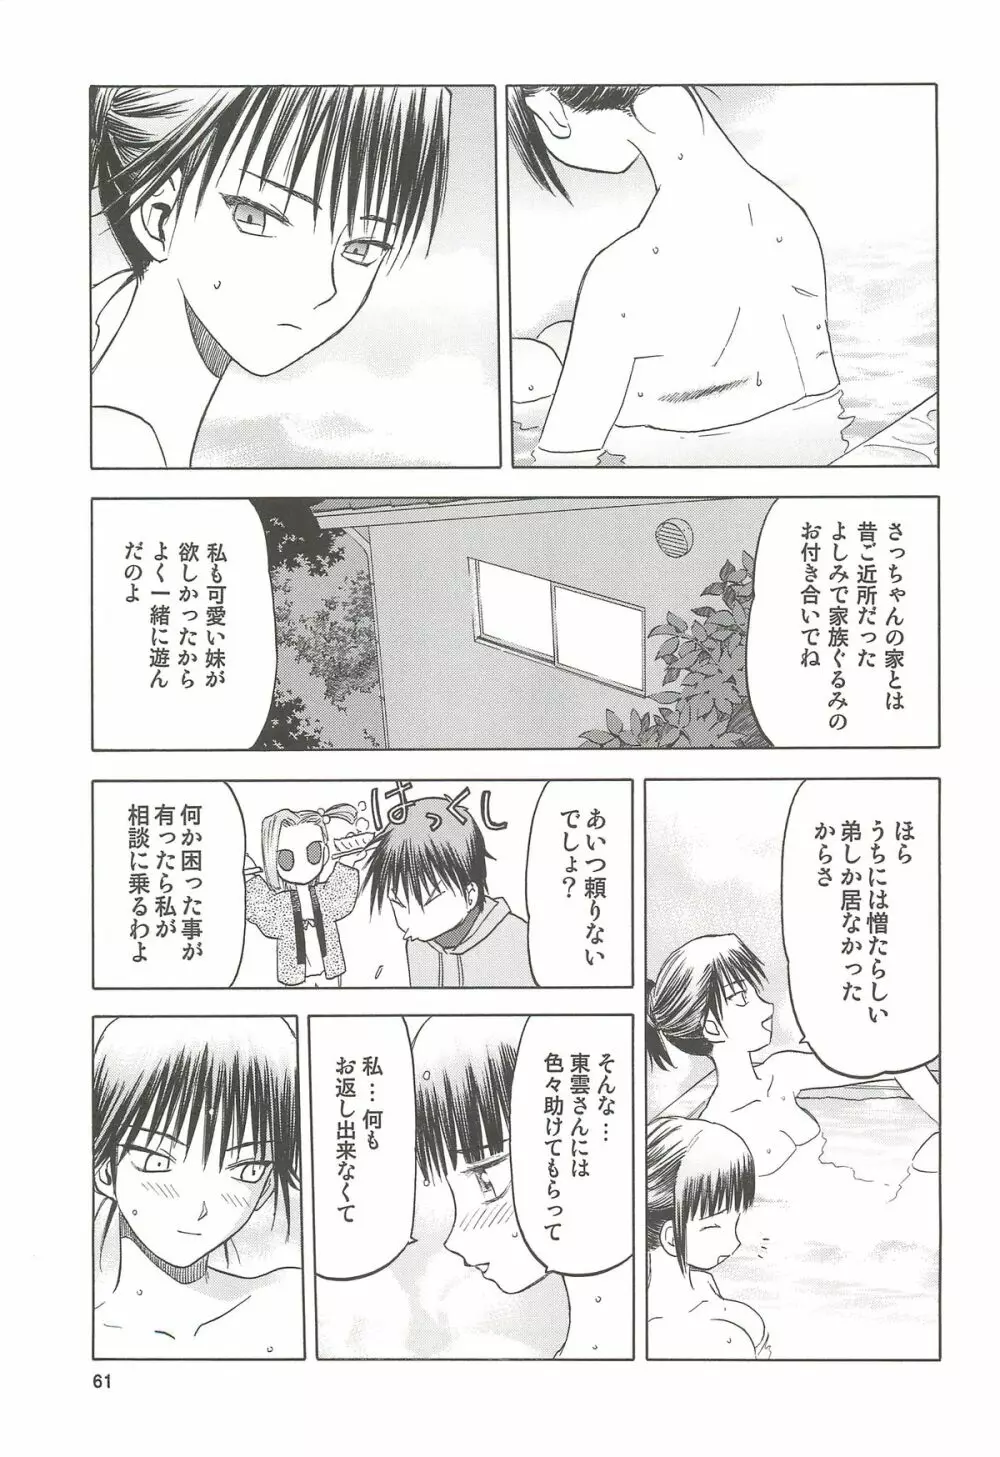 blue snow blue 総集編4 scene.10～scene.12 - page62